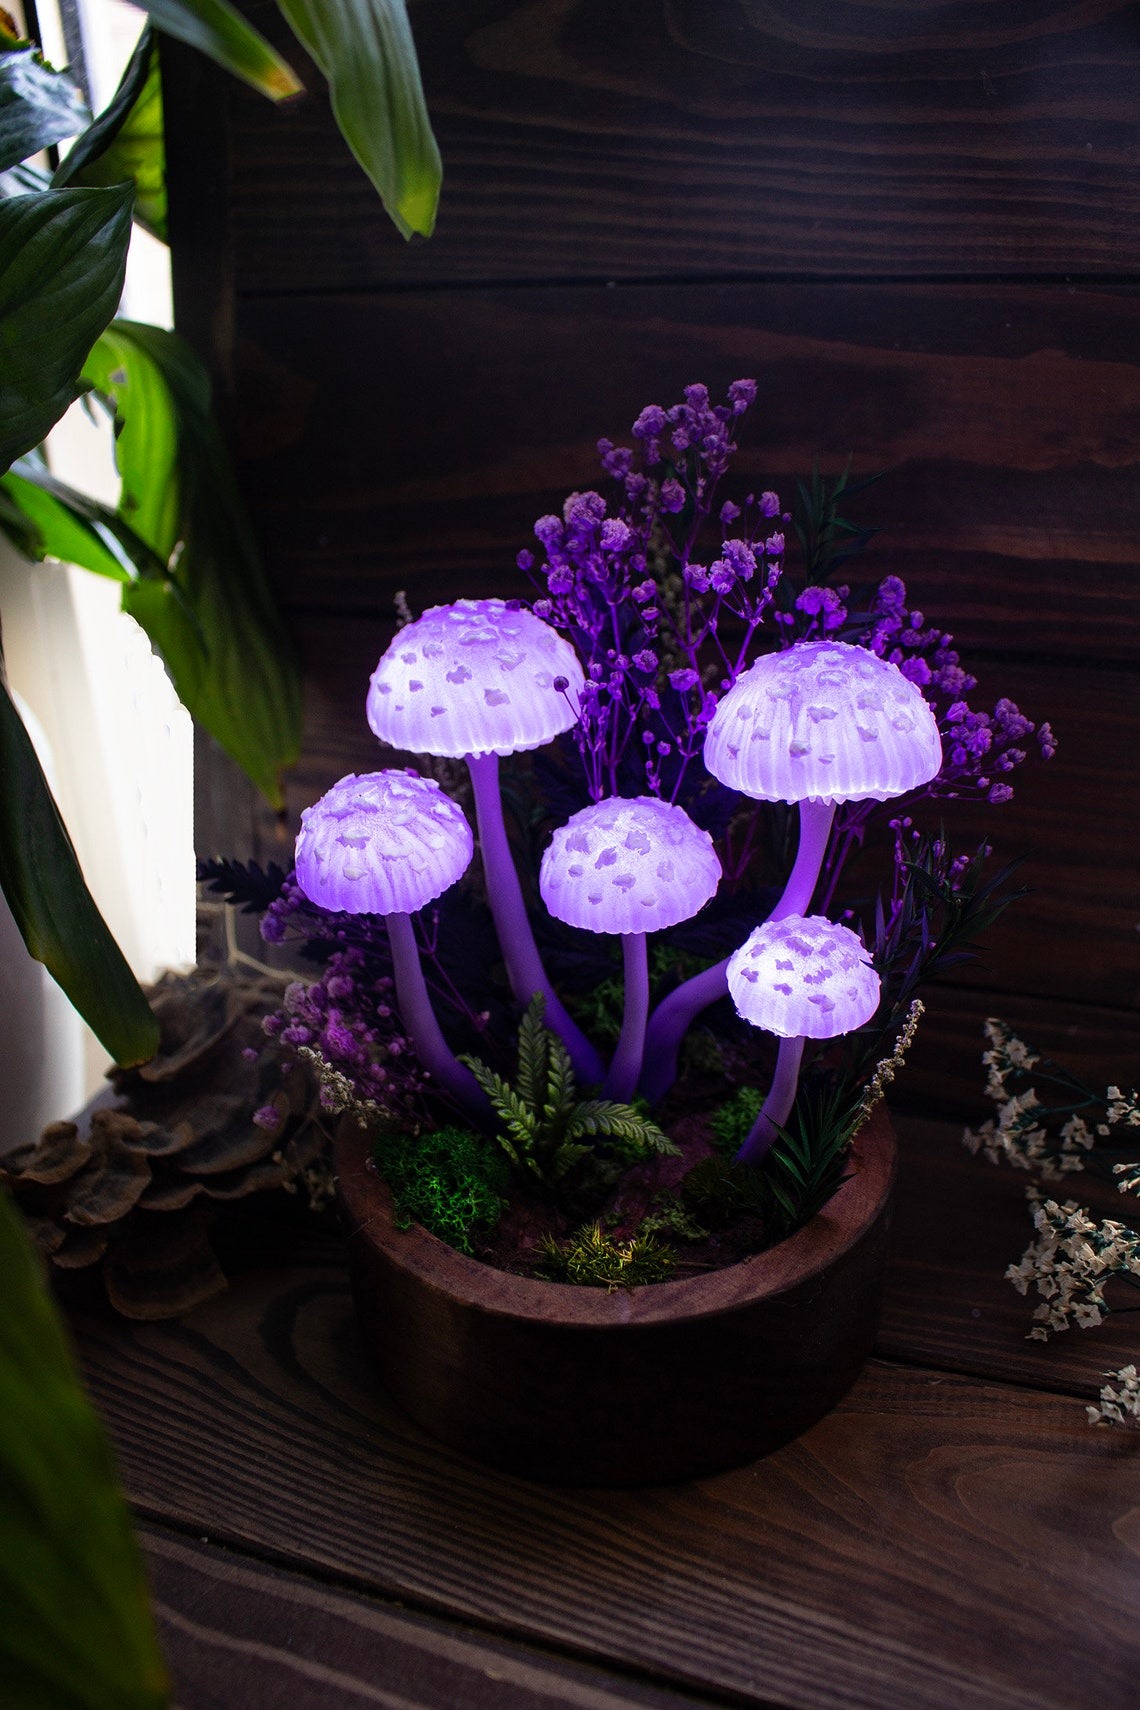 Wonderful Mushroom Lamps With Vivid Colors By Katya Sneg (9)